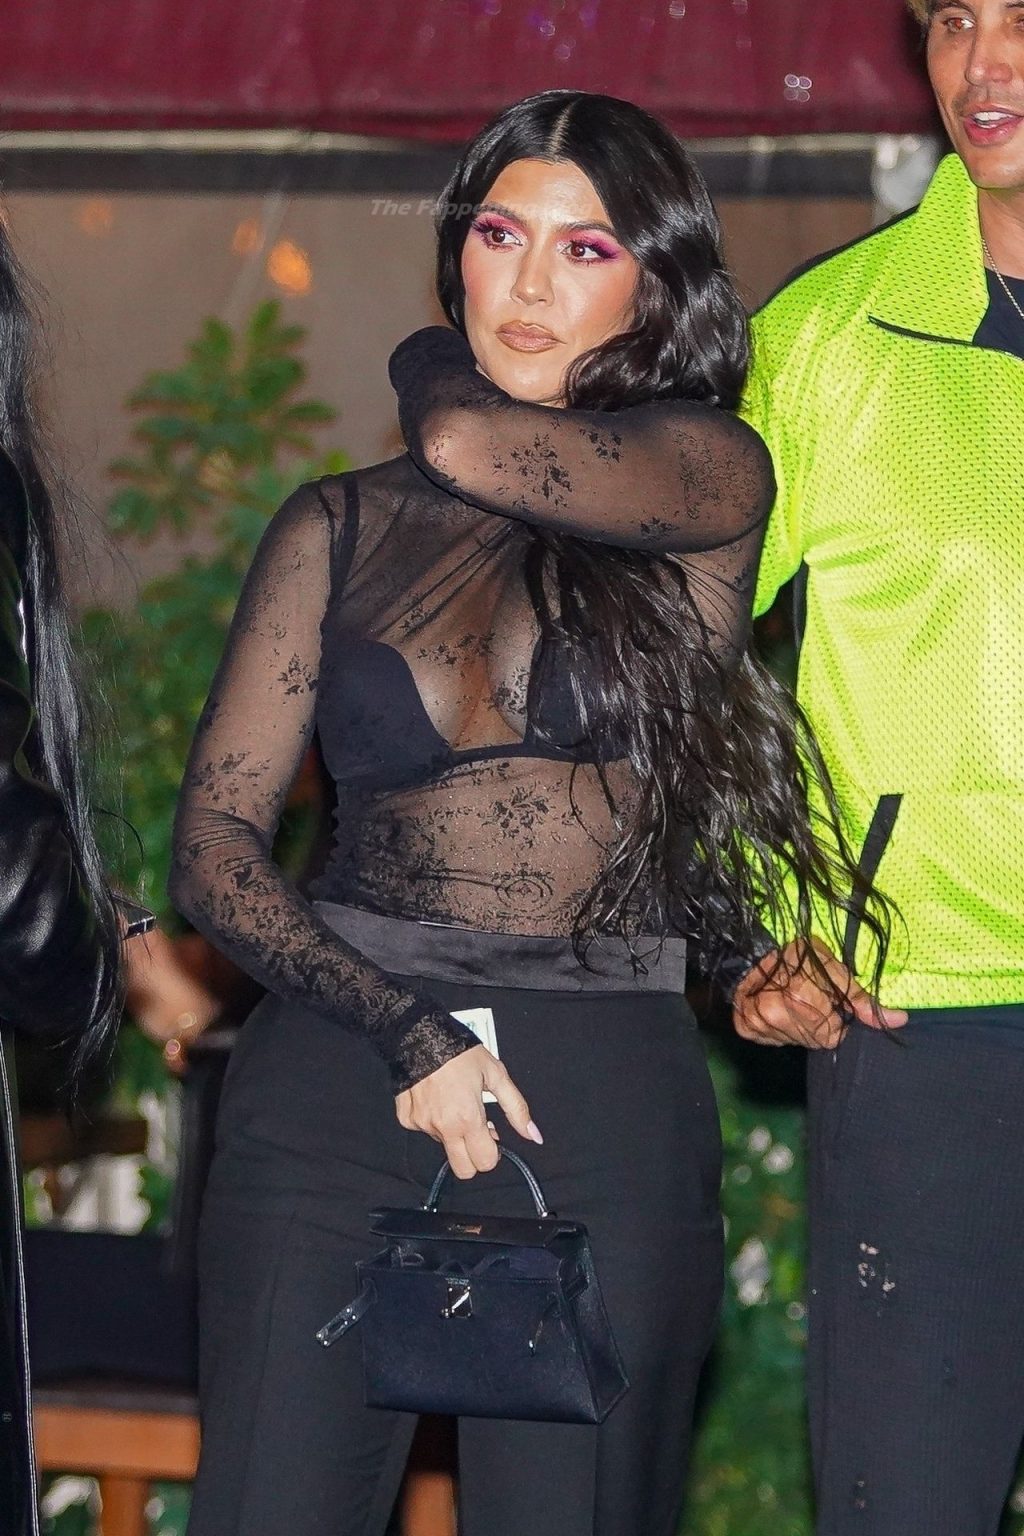 Kourtney Kardashian Displays Her Tits at the Party (22 Photos)